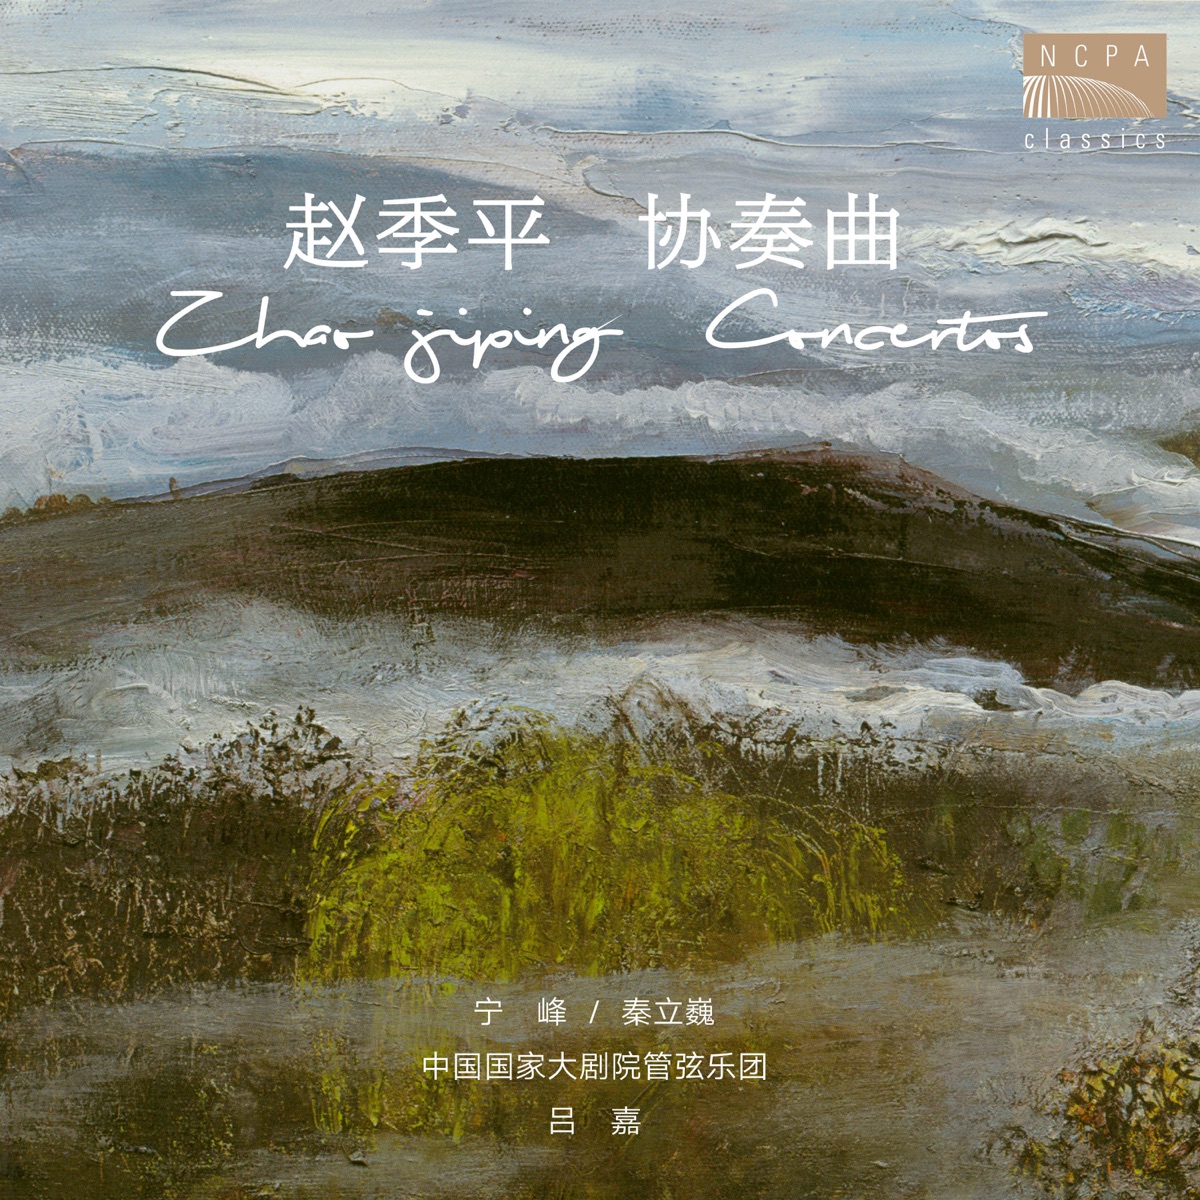 红色小提琴2021 (feat. 黄秋宁) - Album by Ning Feng - Apple Music